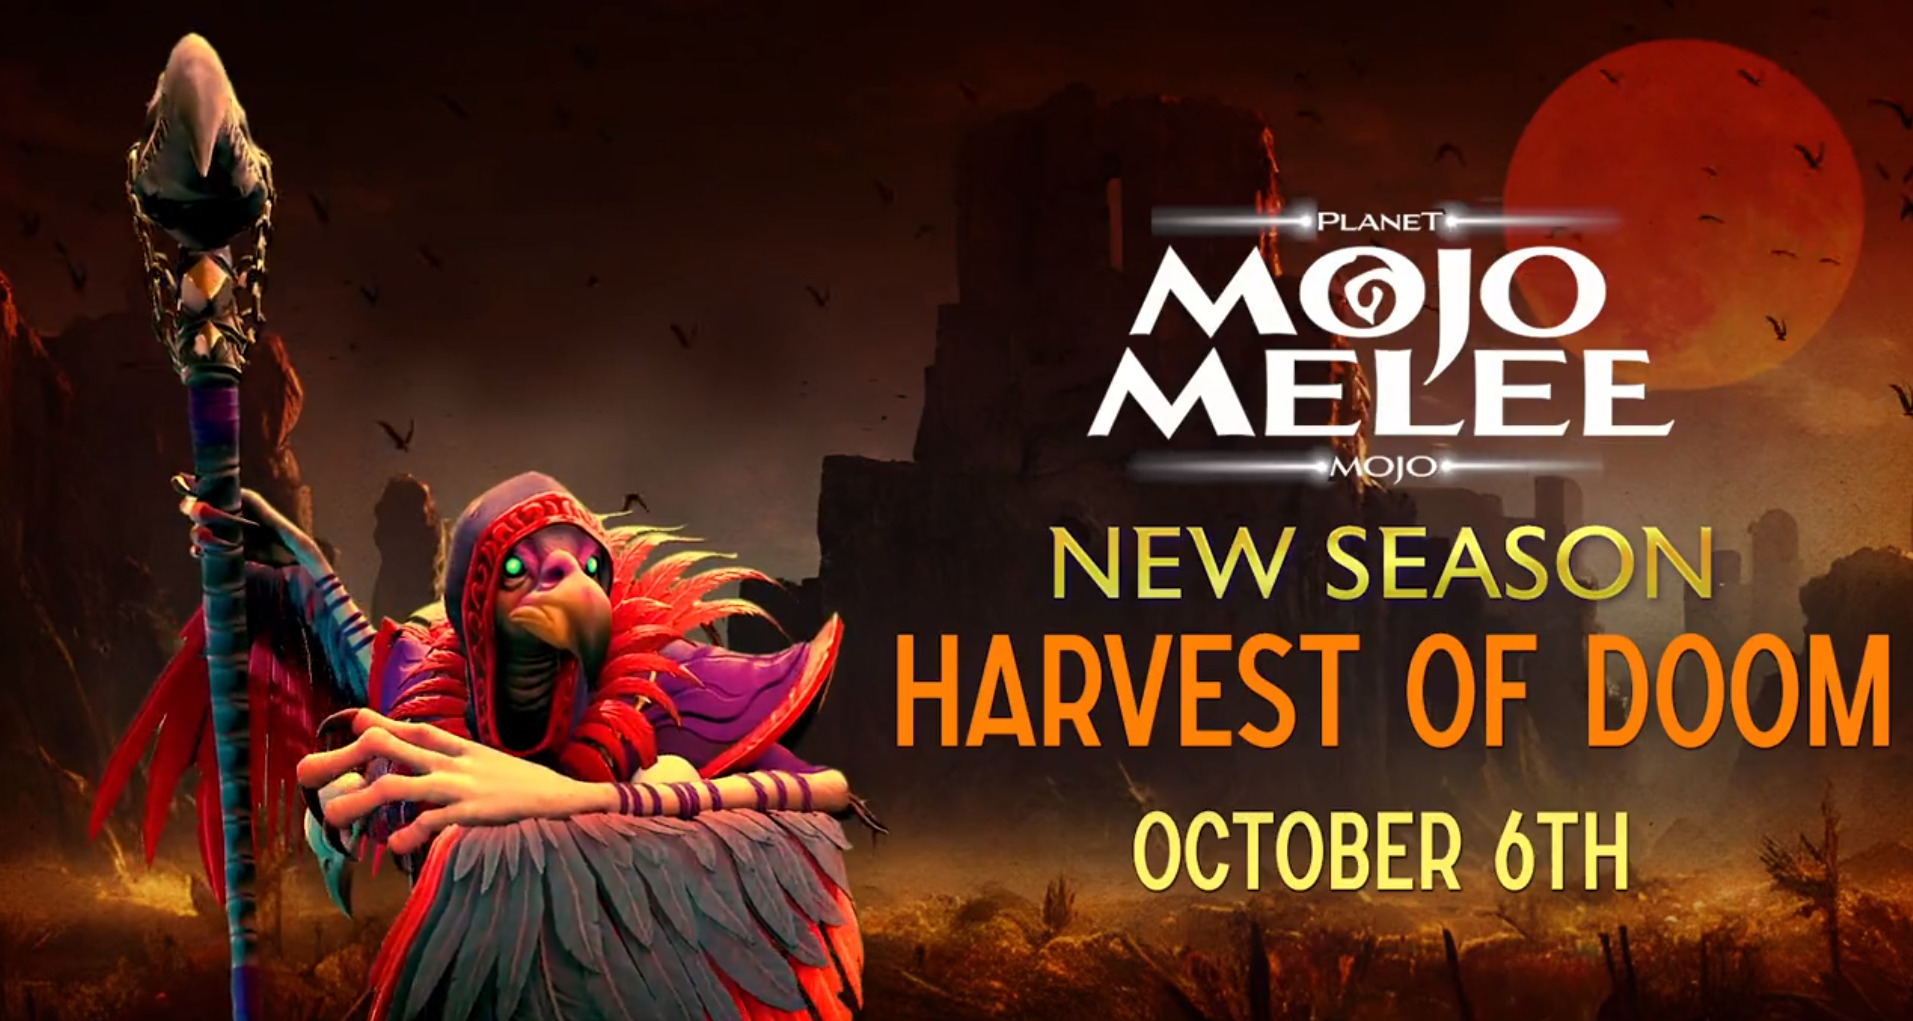 Play the Harvest of Doom Season for Mojo Melee